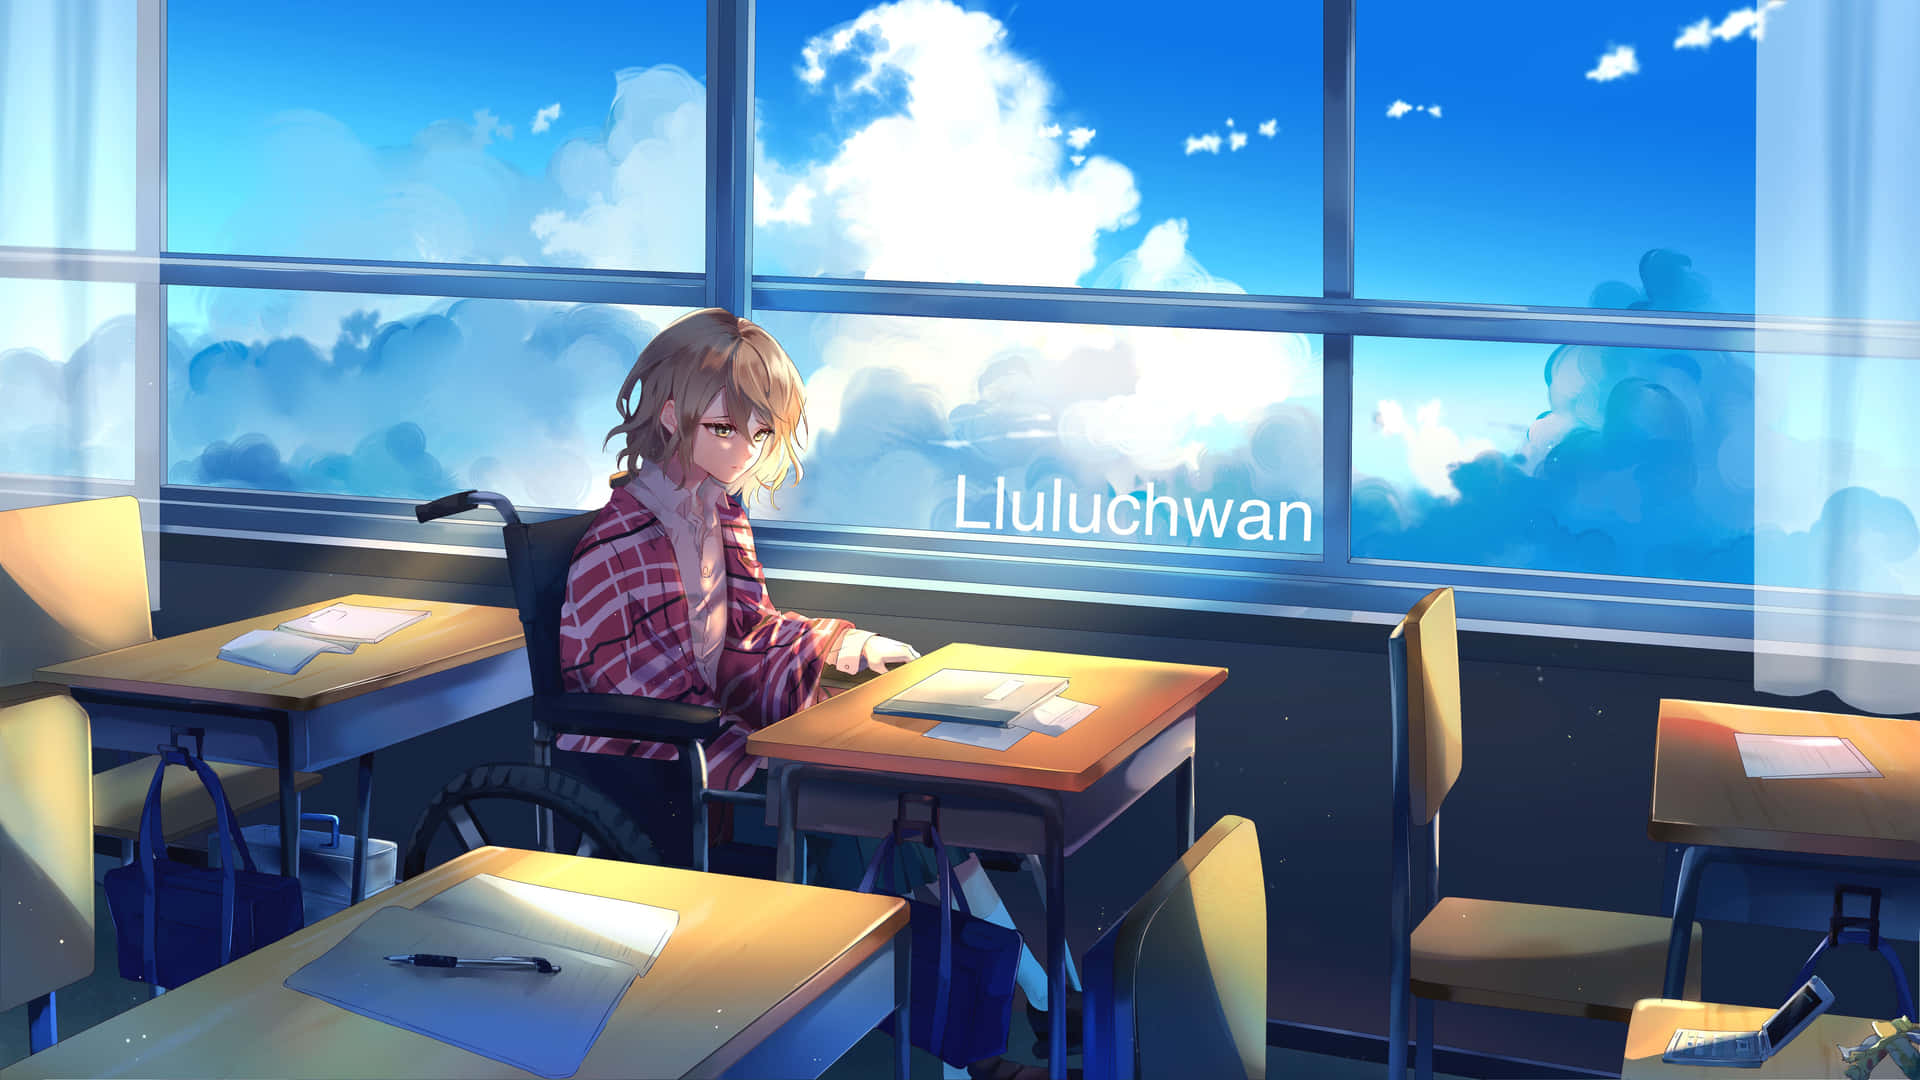 HD wallpaper: anime classroom, education, seat, school, learning, indoors